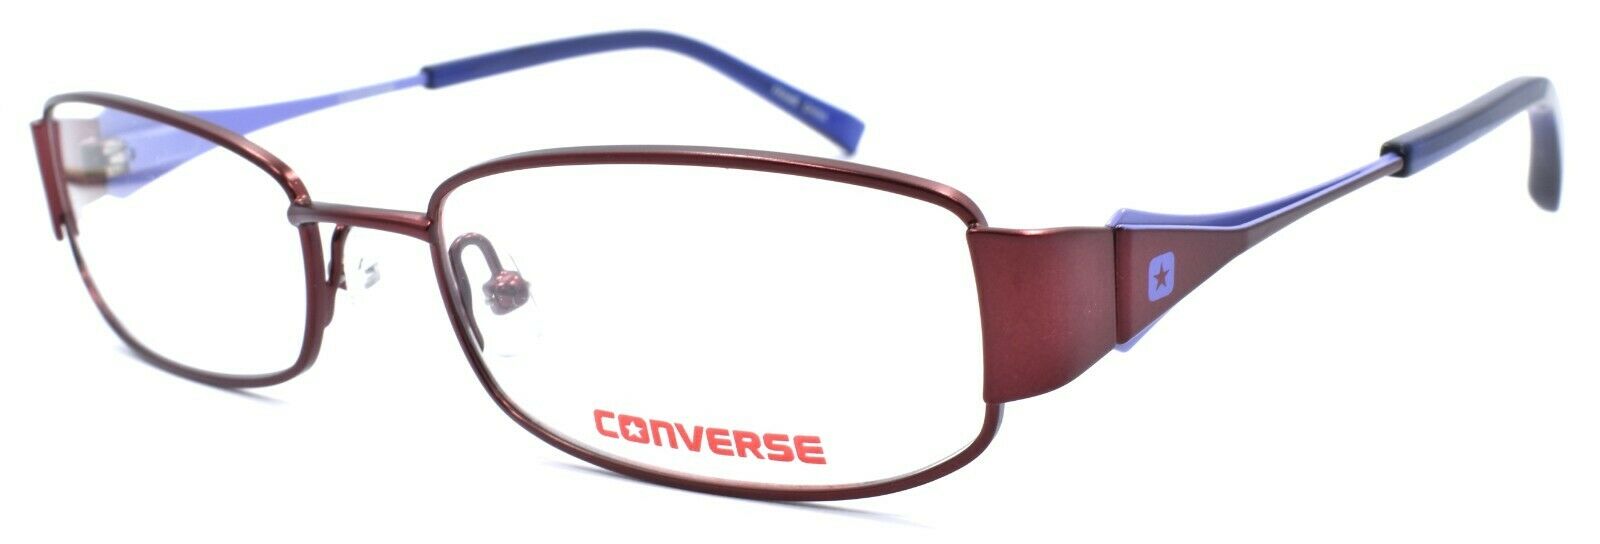 1-CONVERSE K002 Kids Eyeglasses Frames 50-17-135 Burgundy + CASE-751286244762-IKSpecs